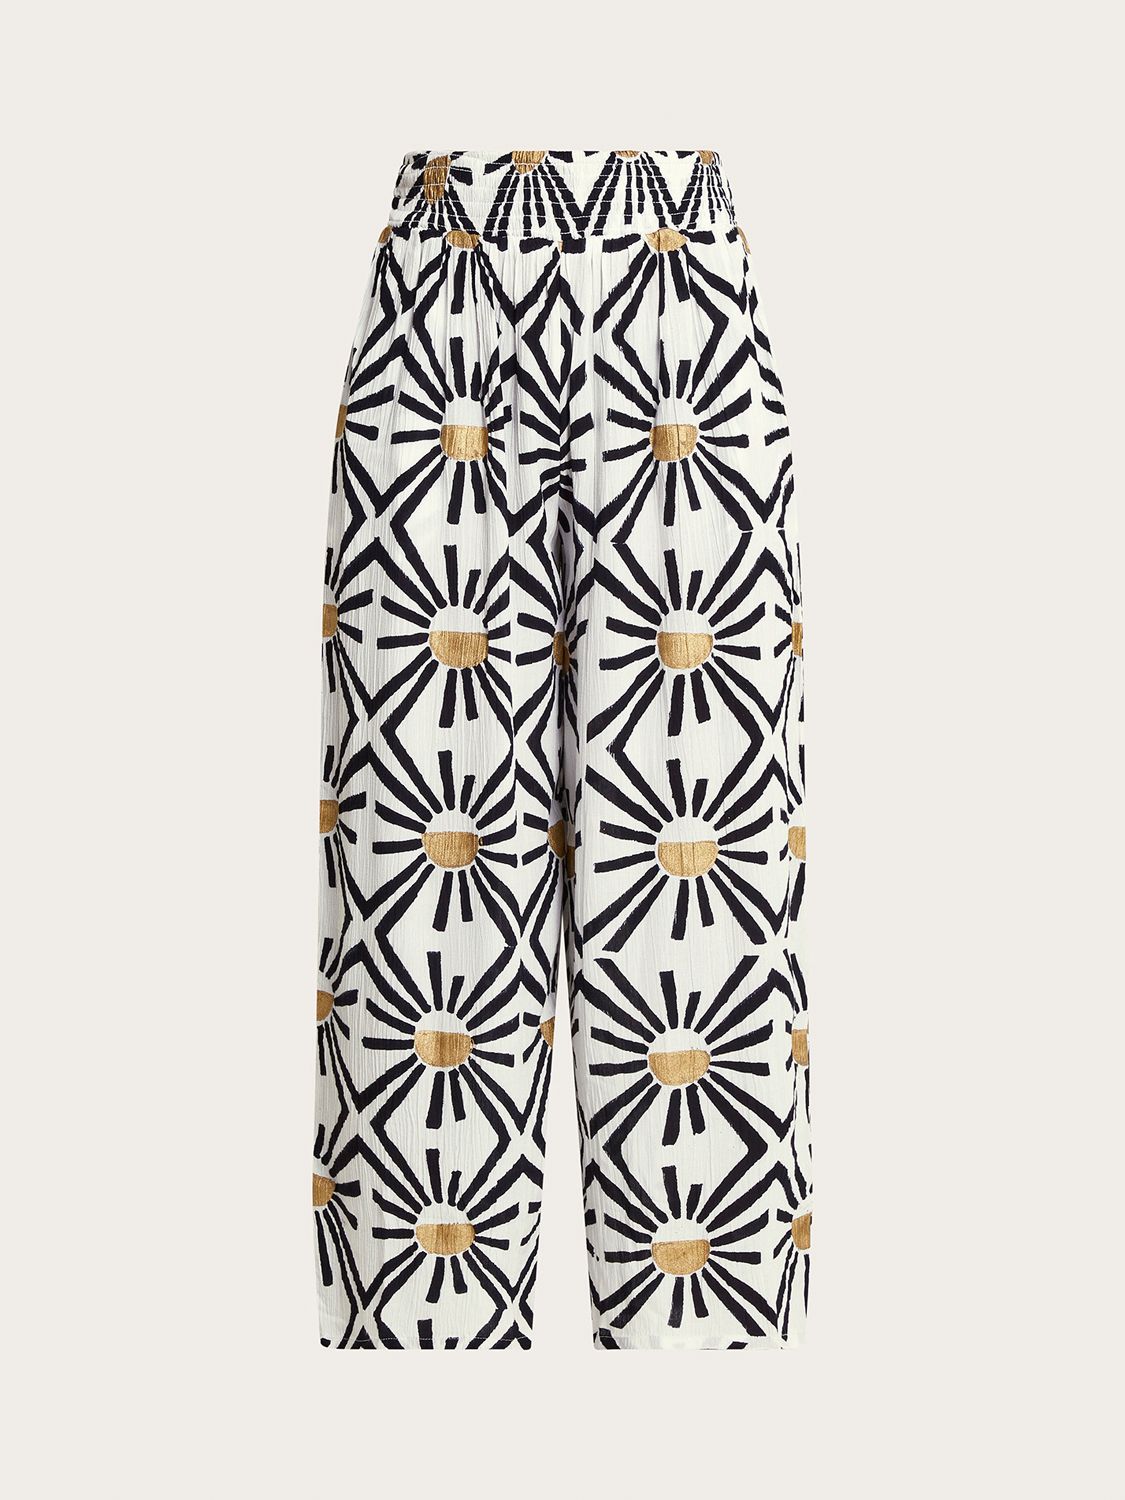 Monsoon Zamora Geometric Sun Print Cropped Trousers, White/Multi, S